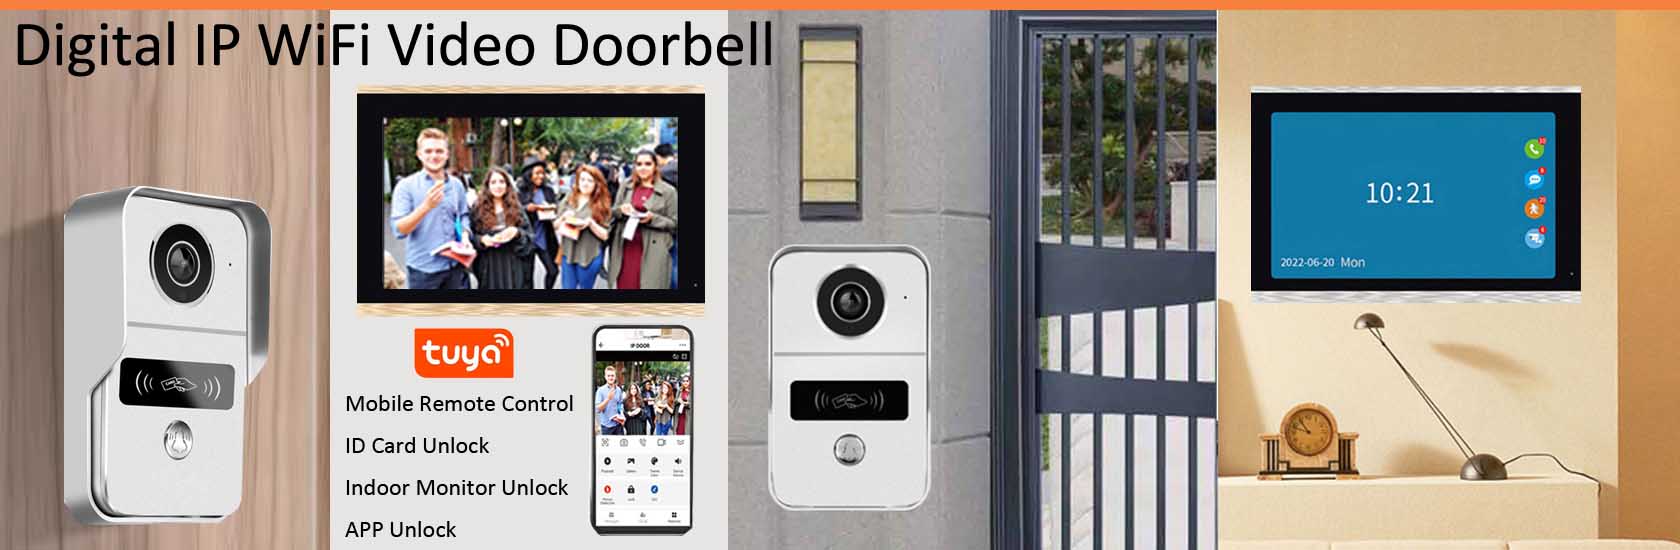 WiFi Video Doorbell with Indoor Monitor VF-DB04S